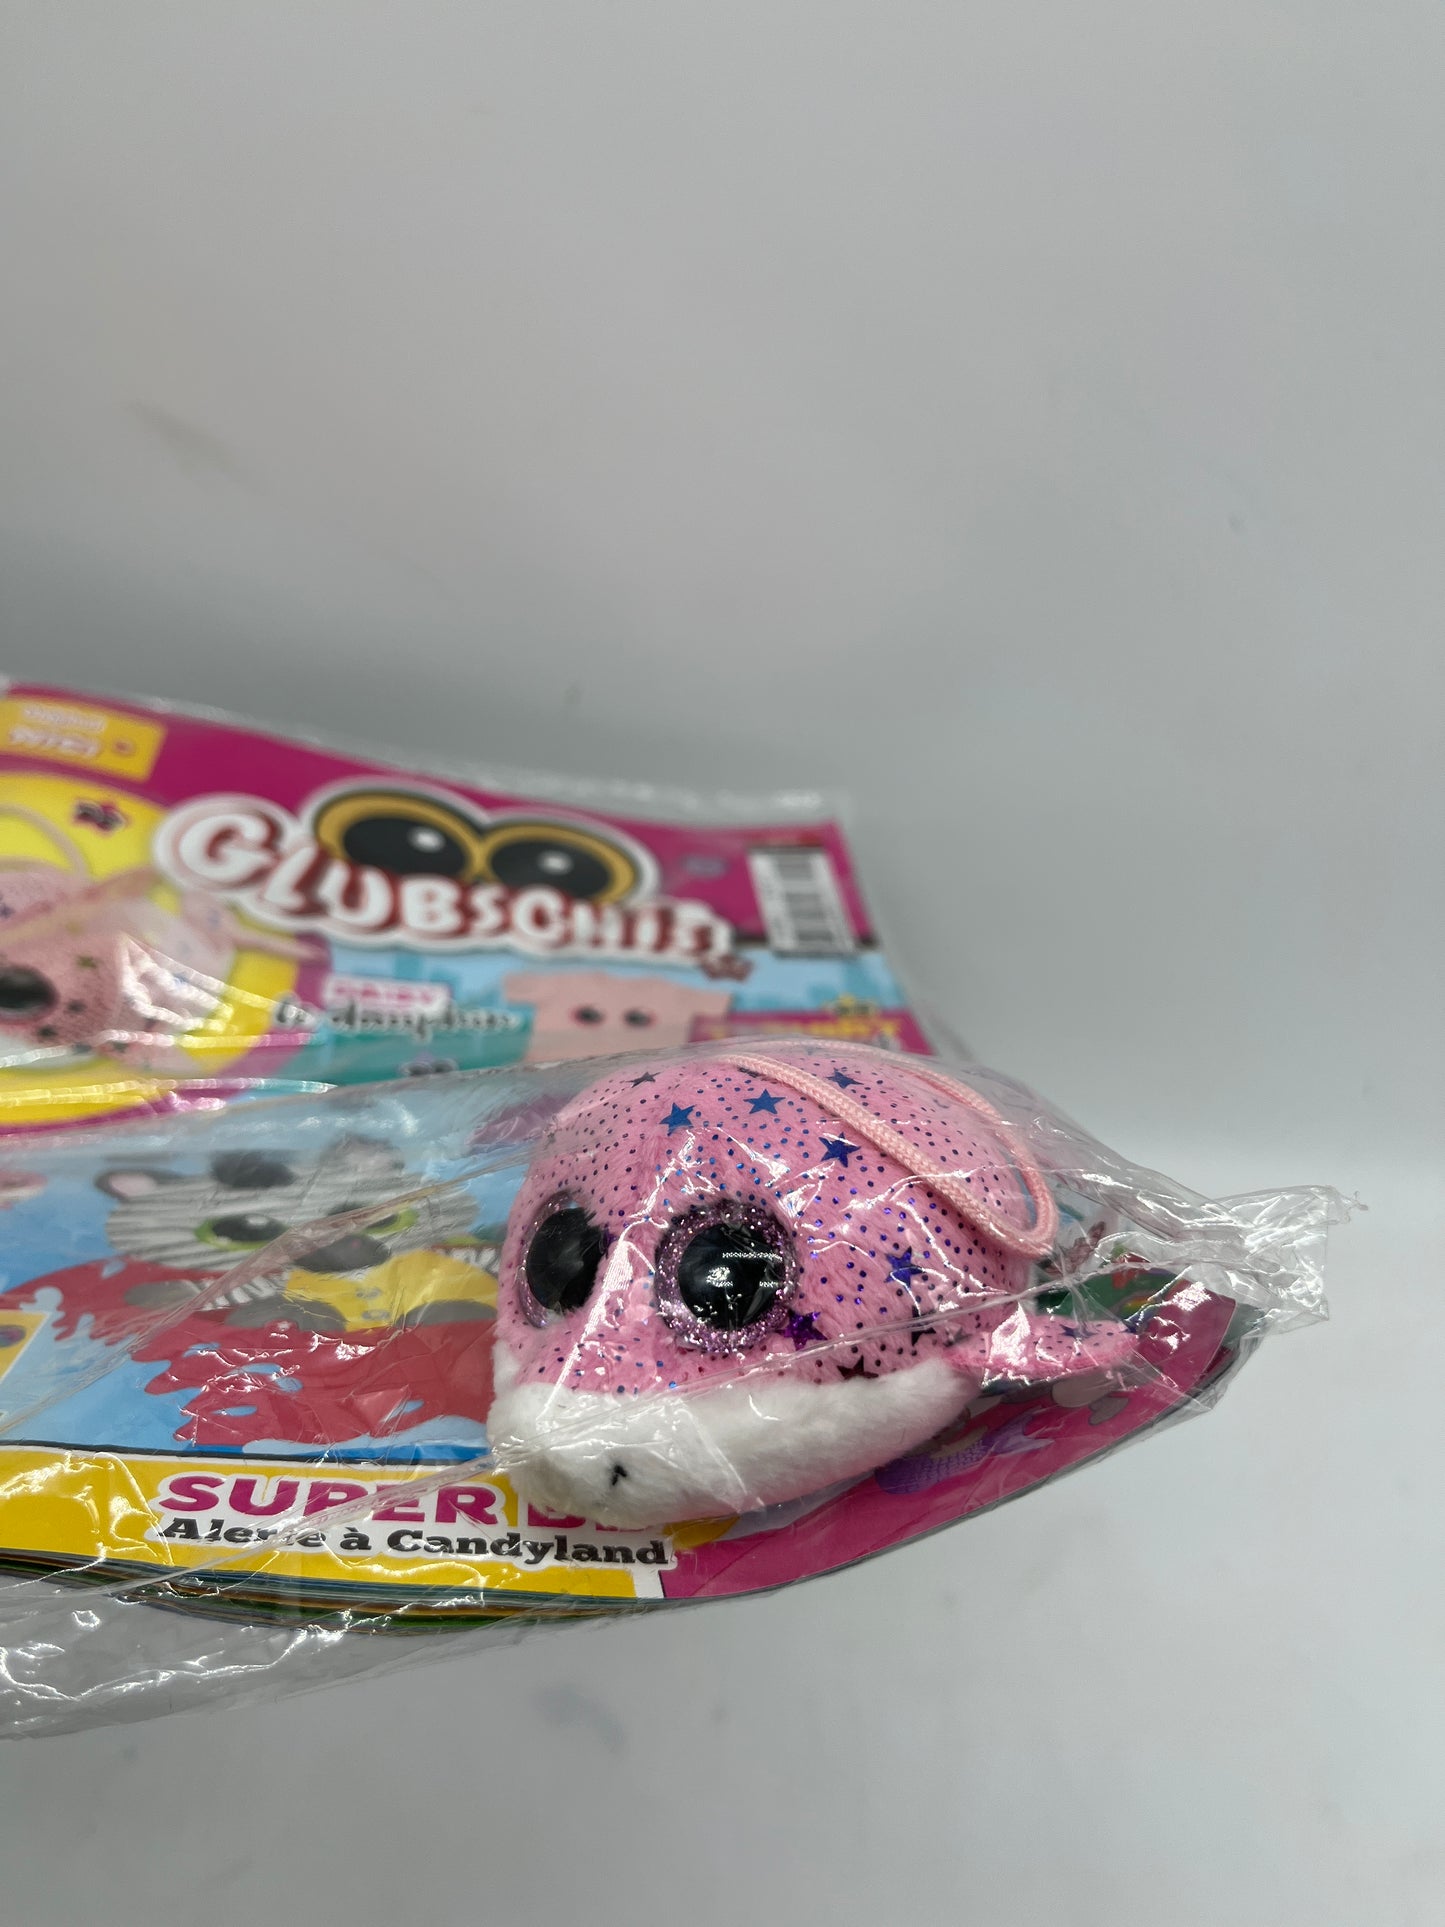 Livre d’activité Magazine Glubschies Disney Avec sa peluche dauphin  Neuf sous blister